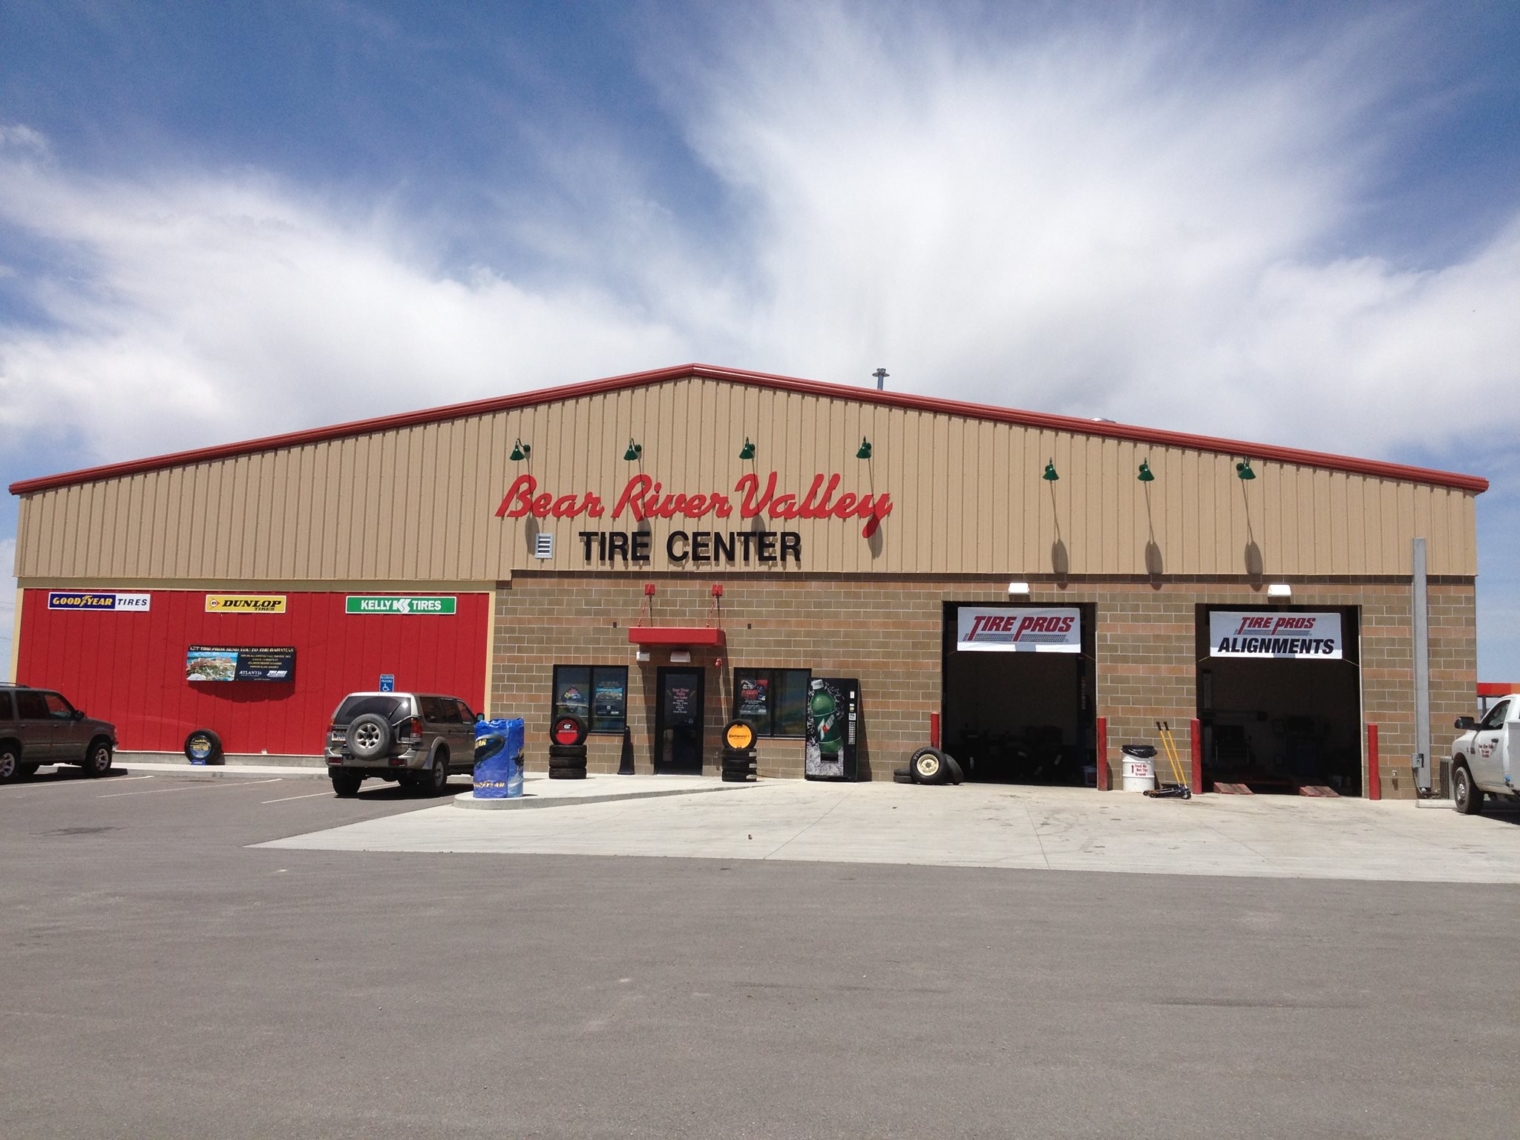 Bear River Valley Co-op Tire Shop in Tremonton, Utah